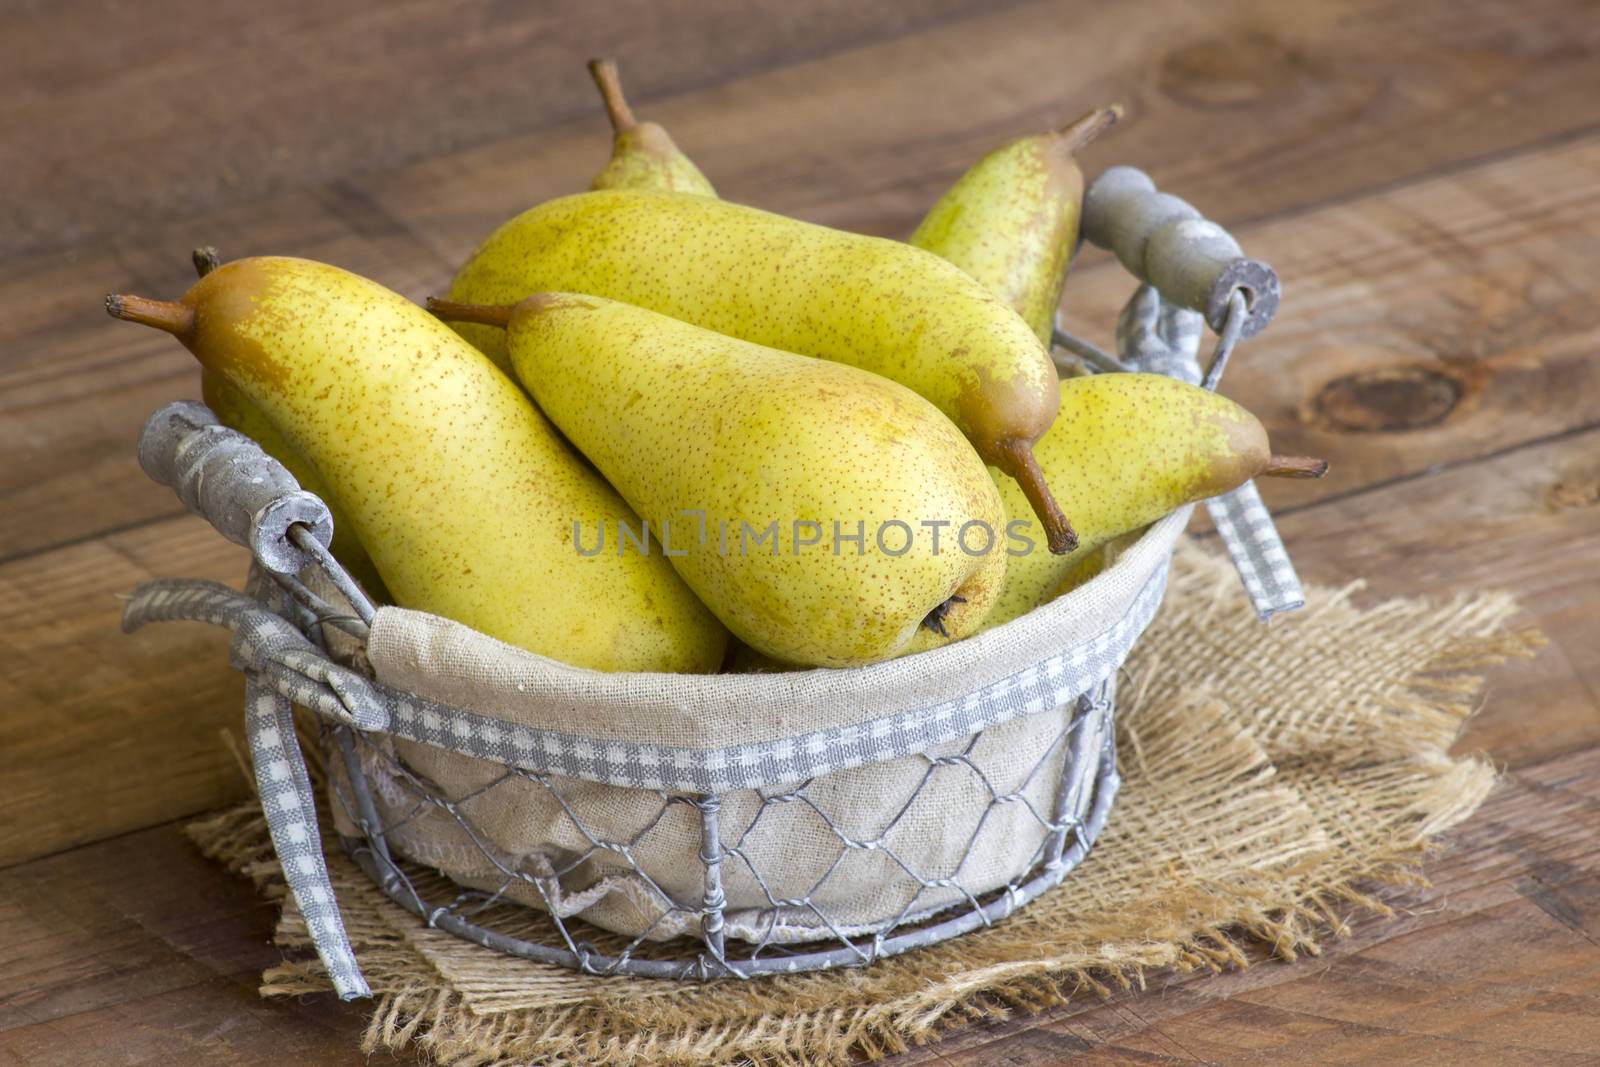 Juicy fresh pears in a basket by miradrozdowski